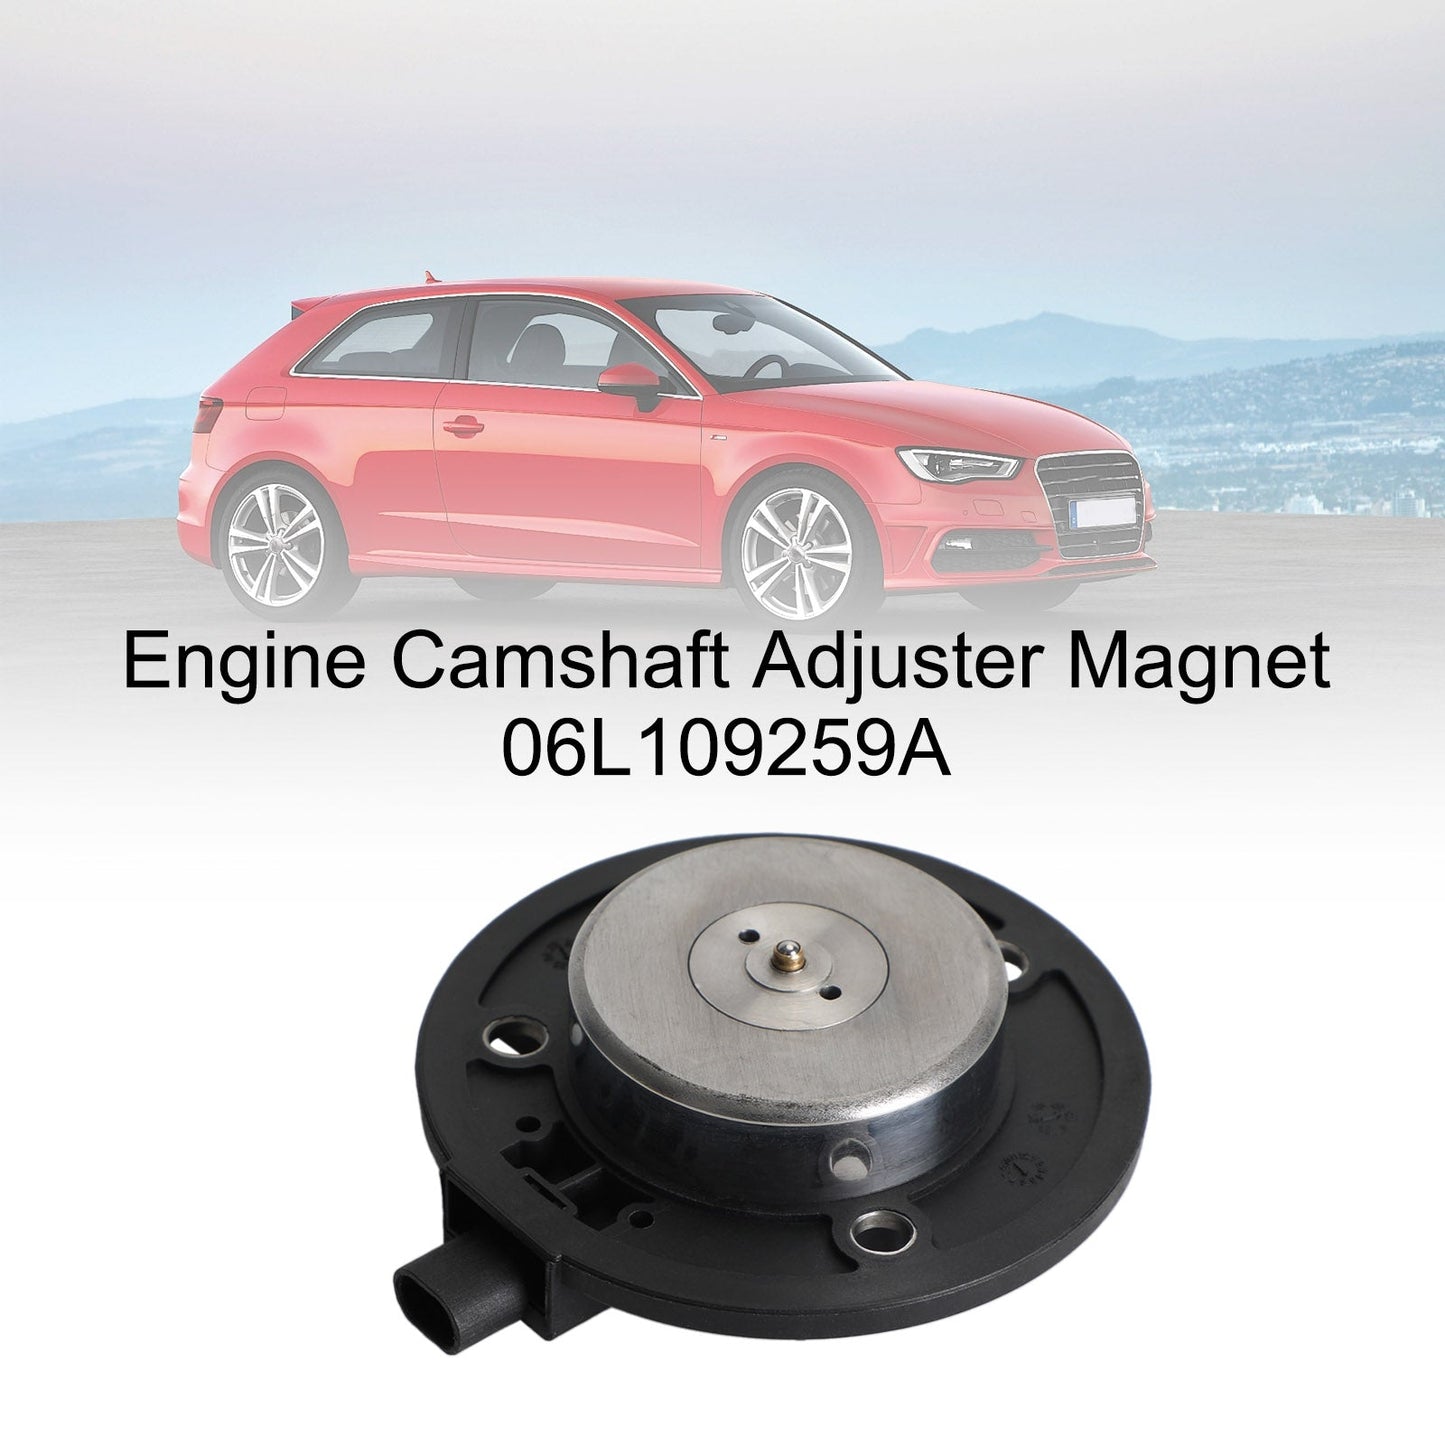 Engine Camshaft Adjuster Magnet for Audi A3 A4 Q3 Quattro Q5 06L109259A